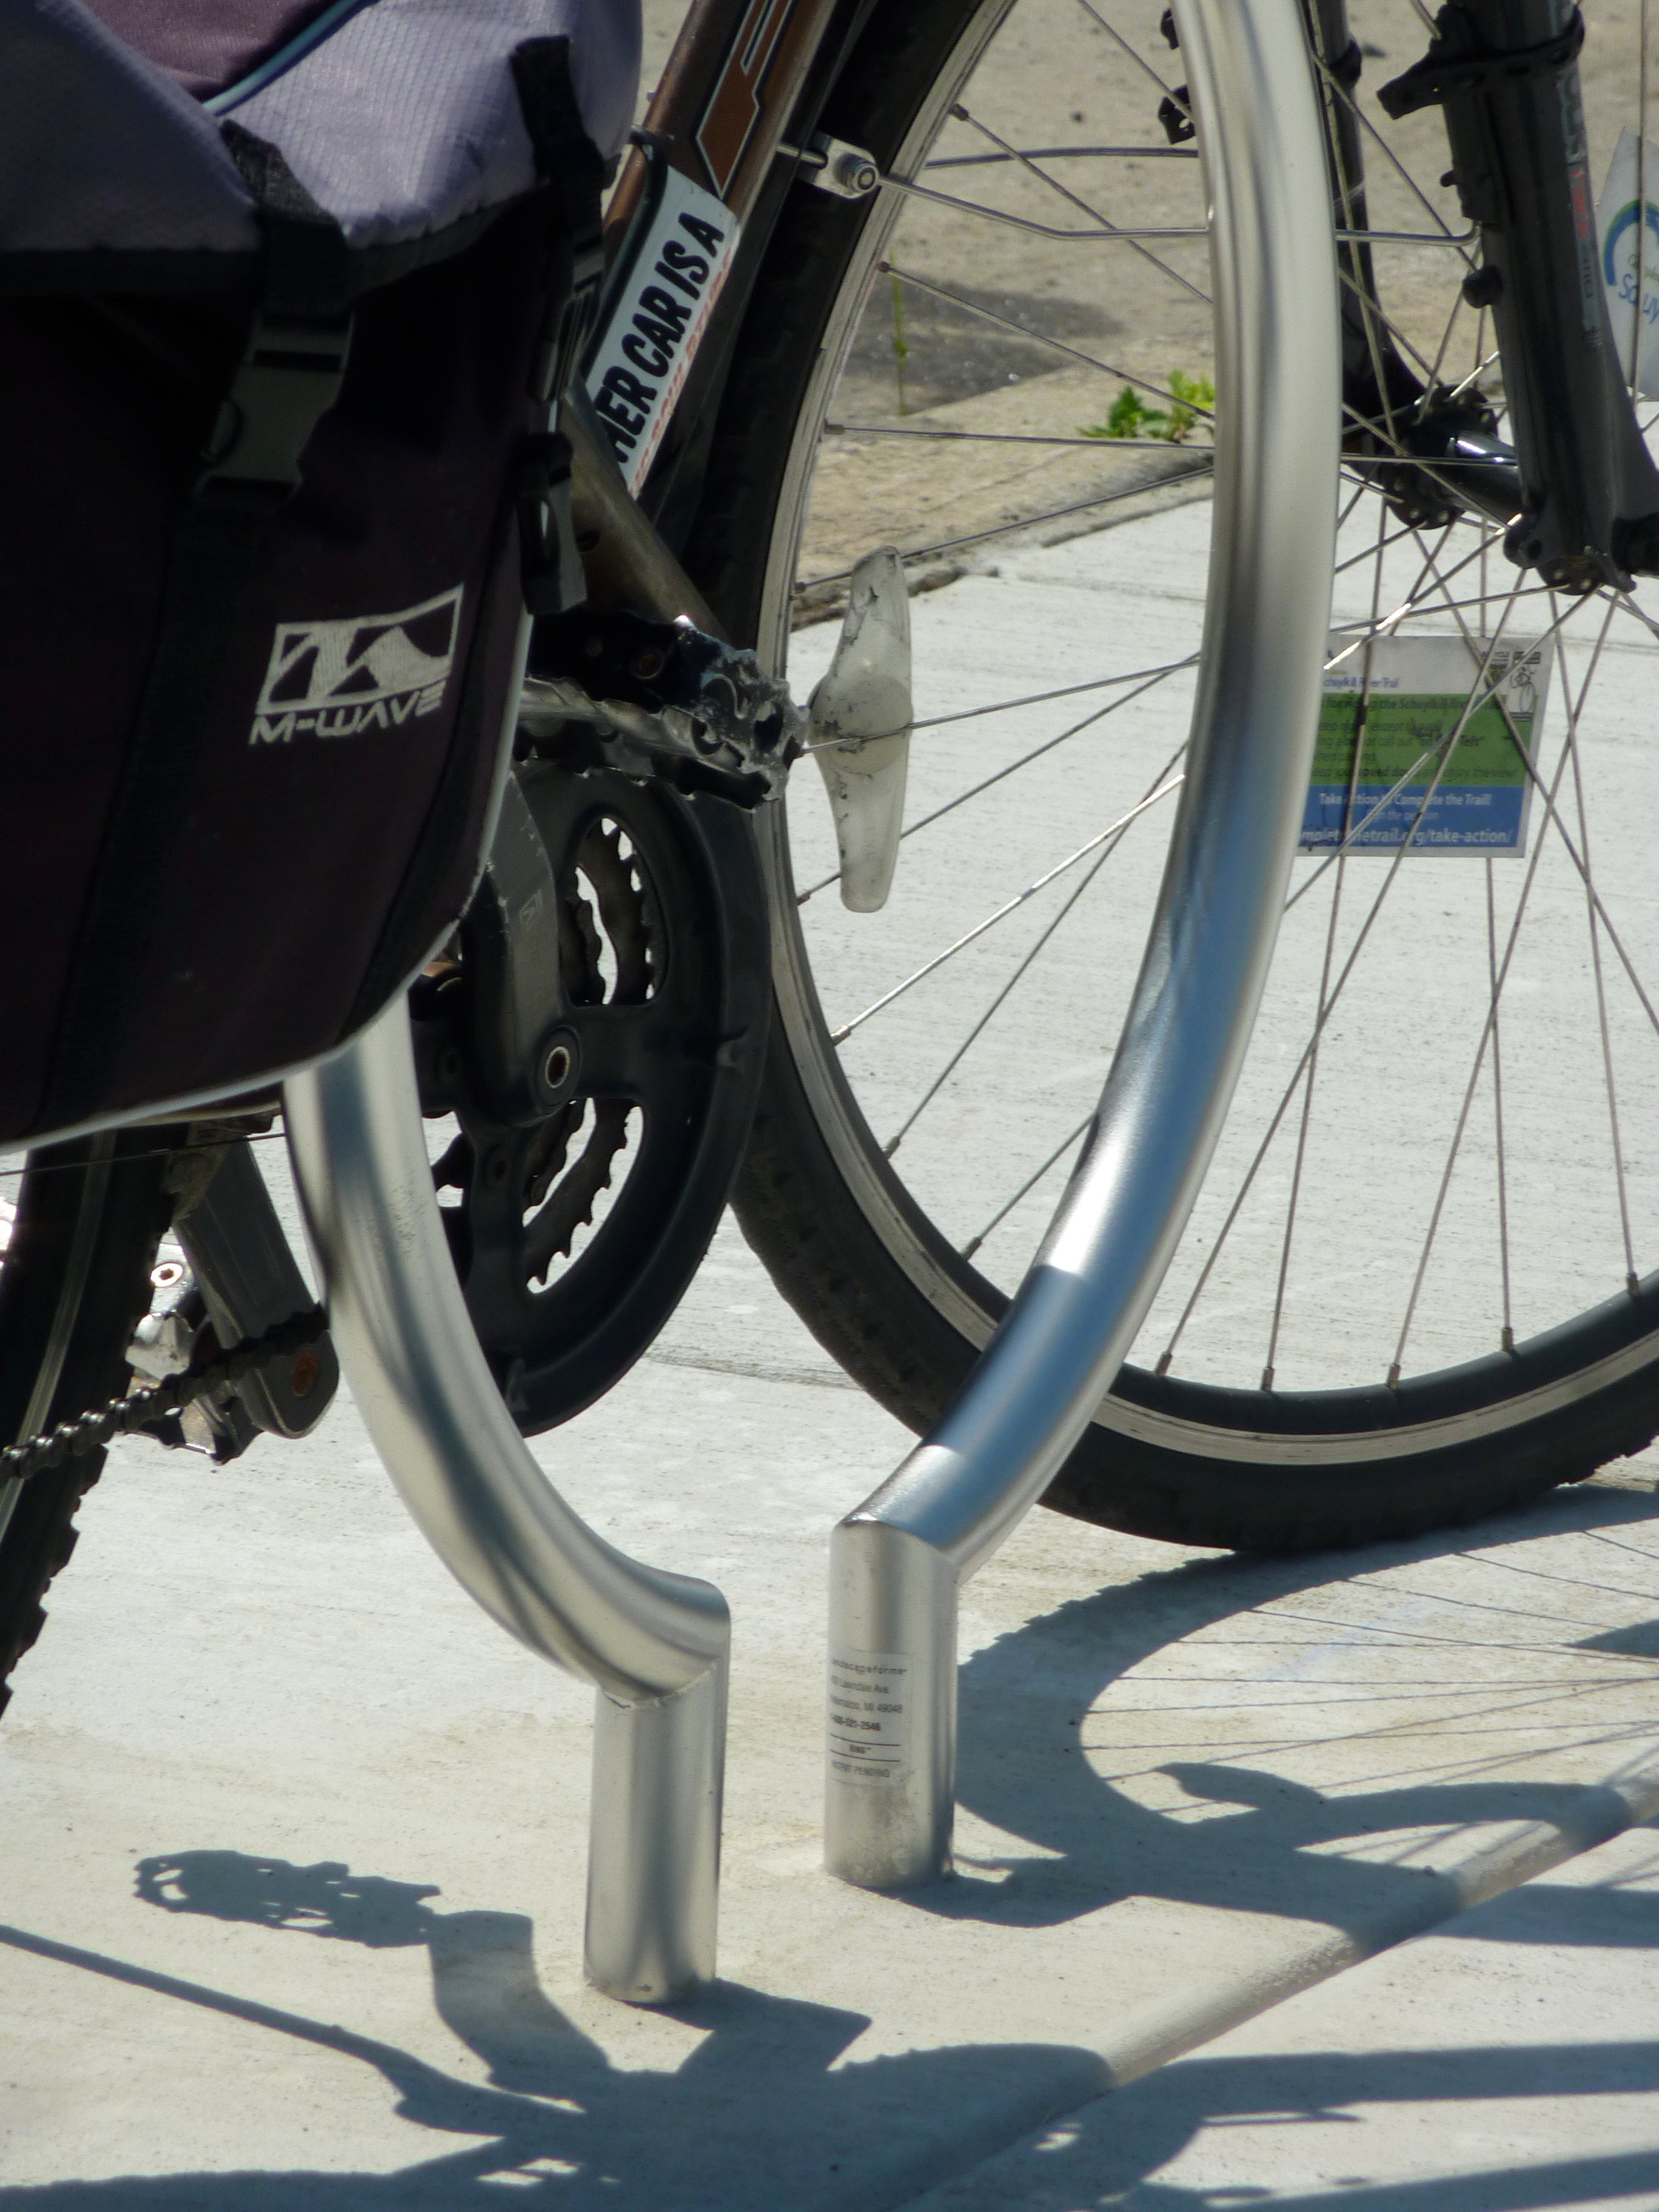 Greco/Hawthorne Park bike rack